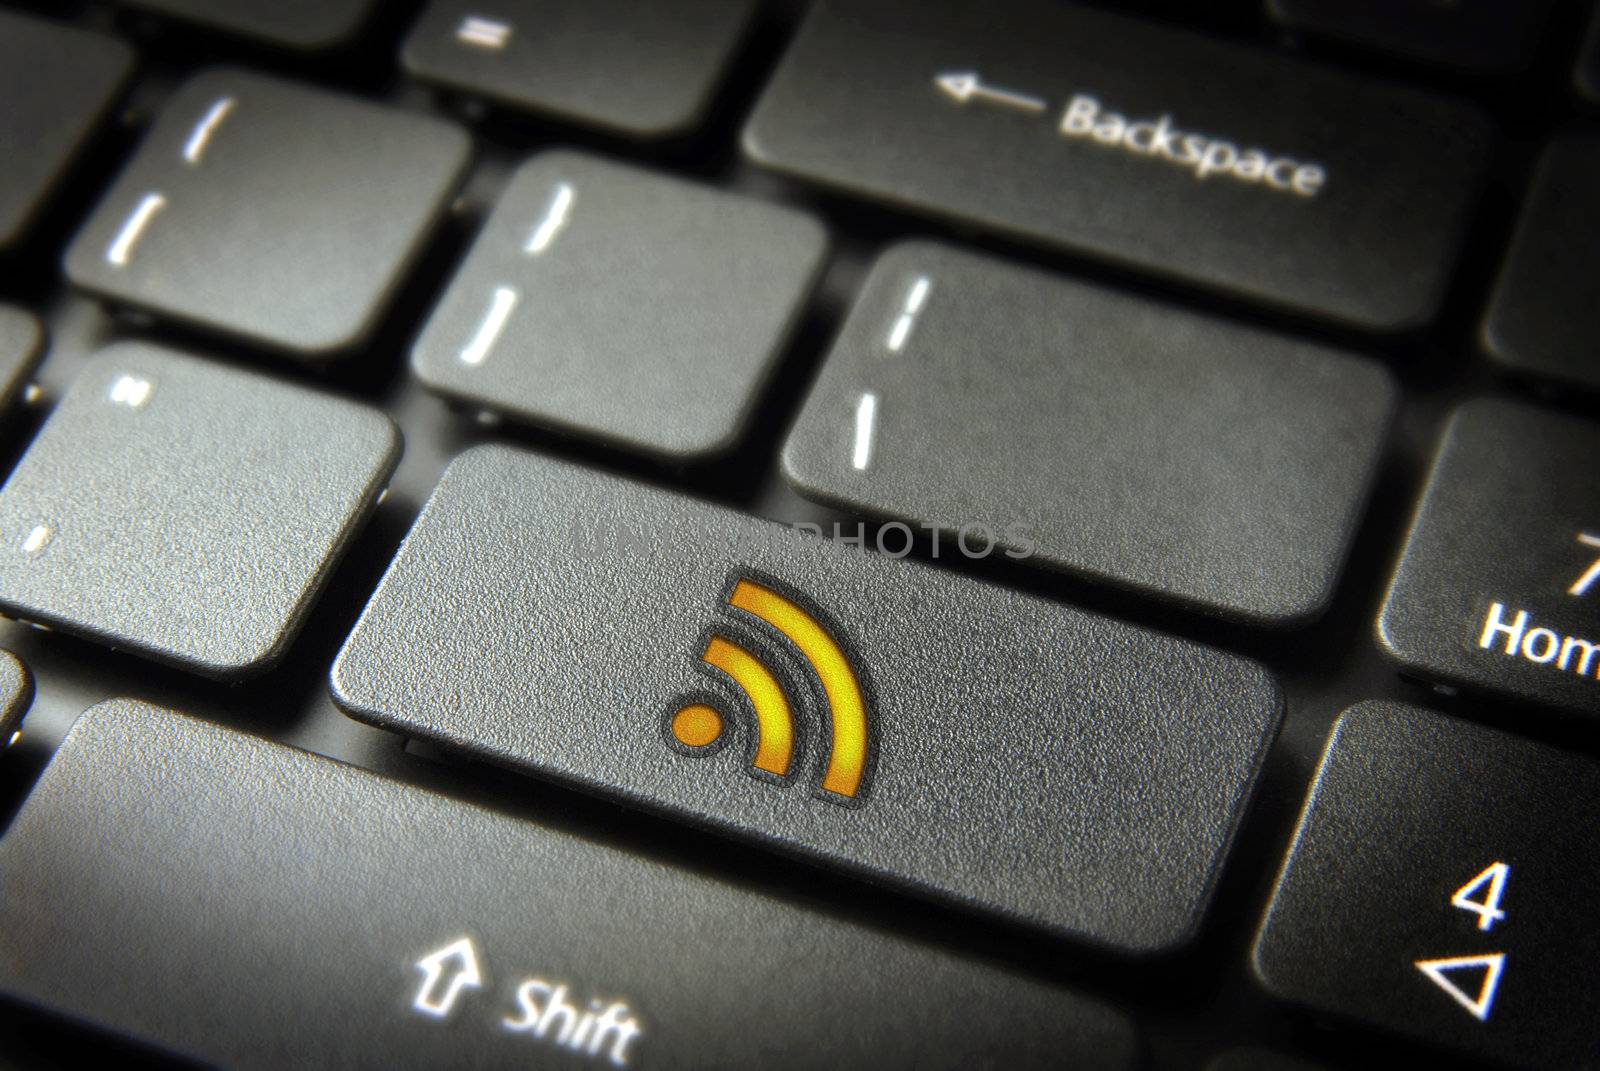 Golden rss keyboard key, internet business background by cienpies